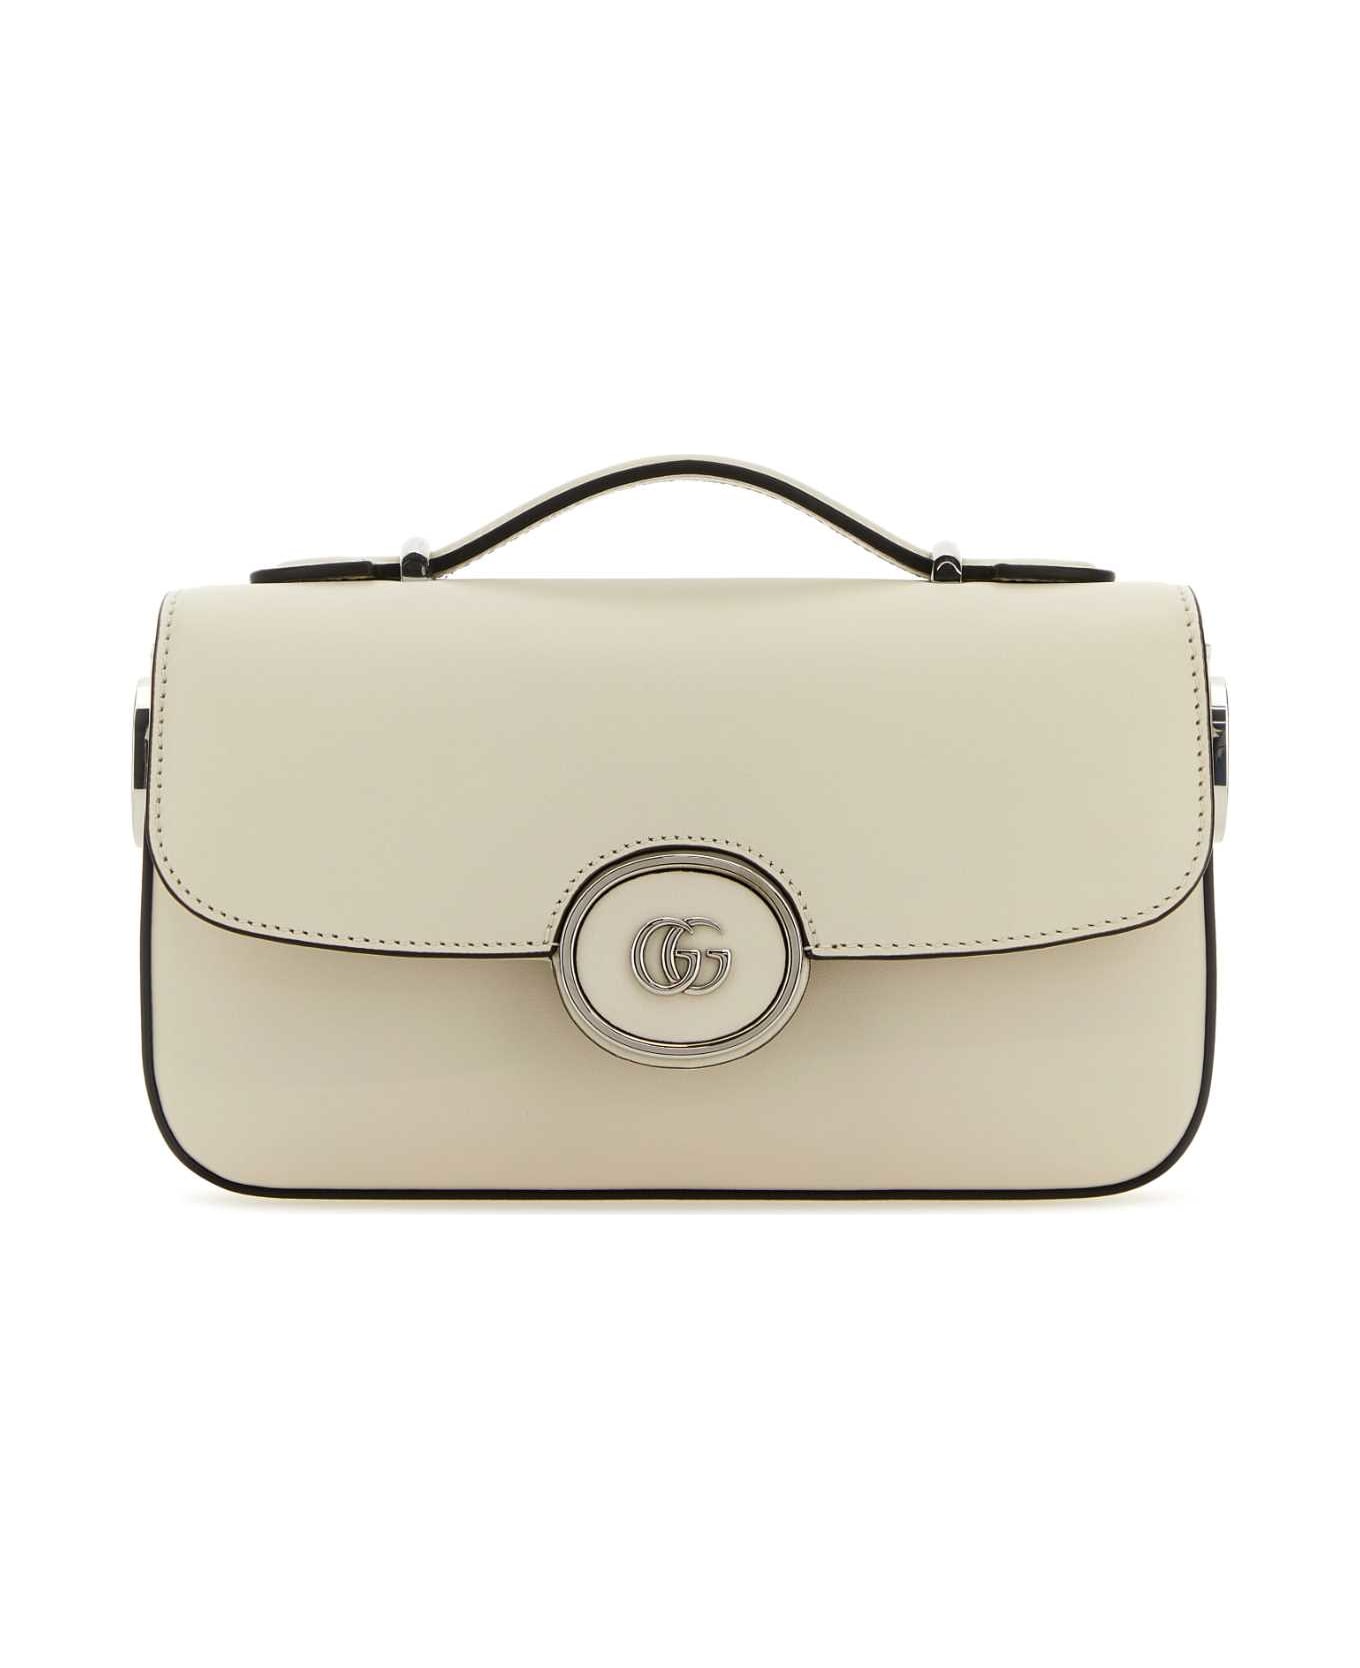 Gucci Ivory Leather Mini Petite Gg Handbag - MYSTICWHITE トートバッグ